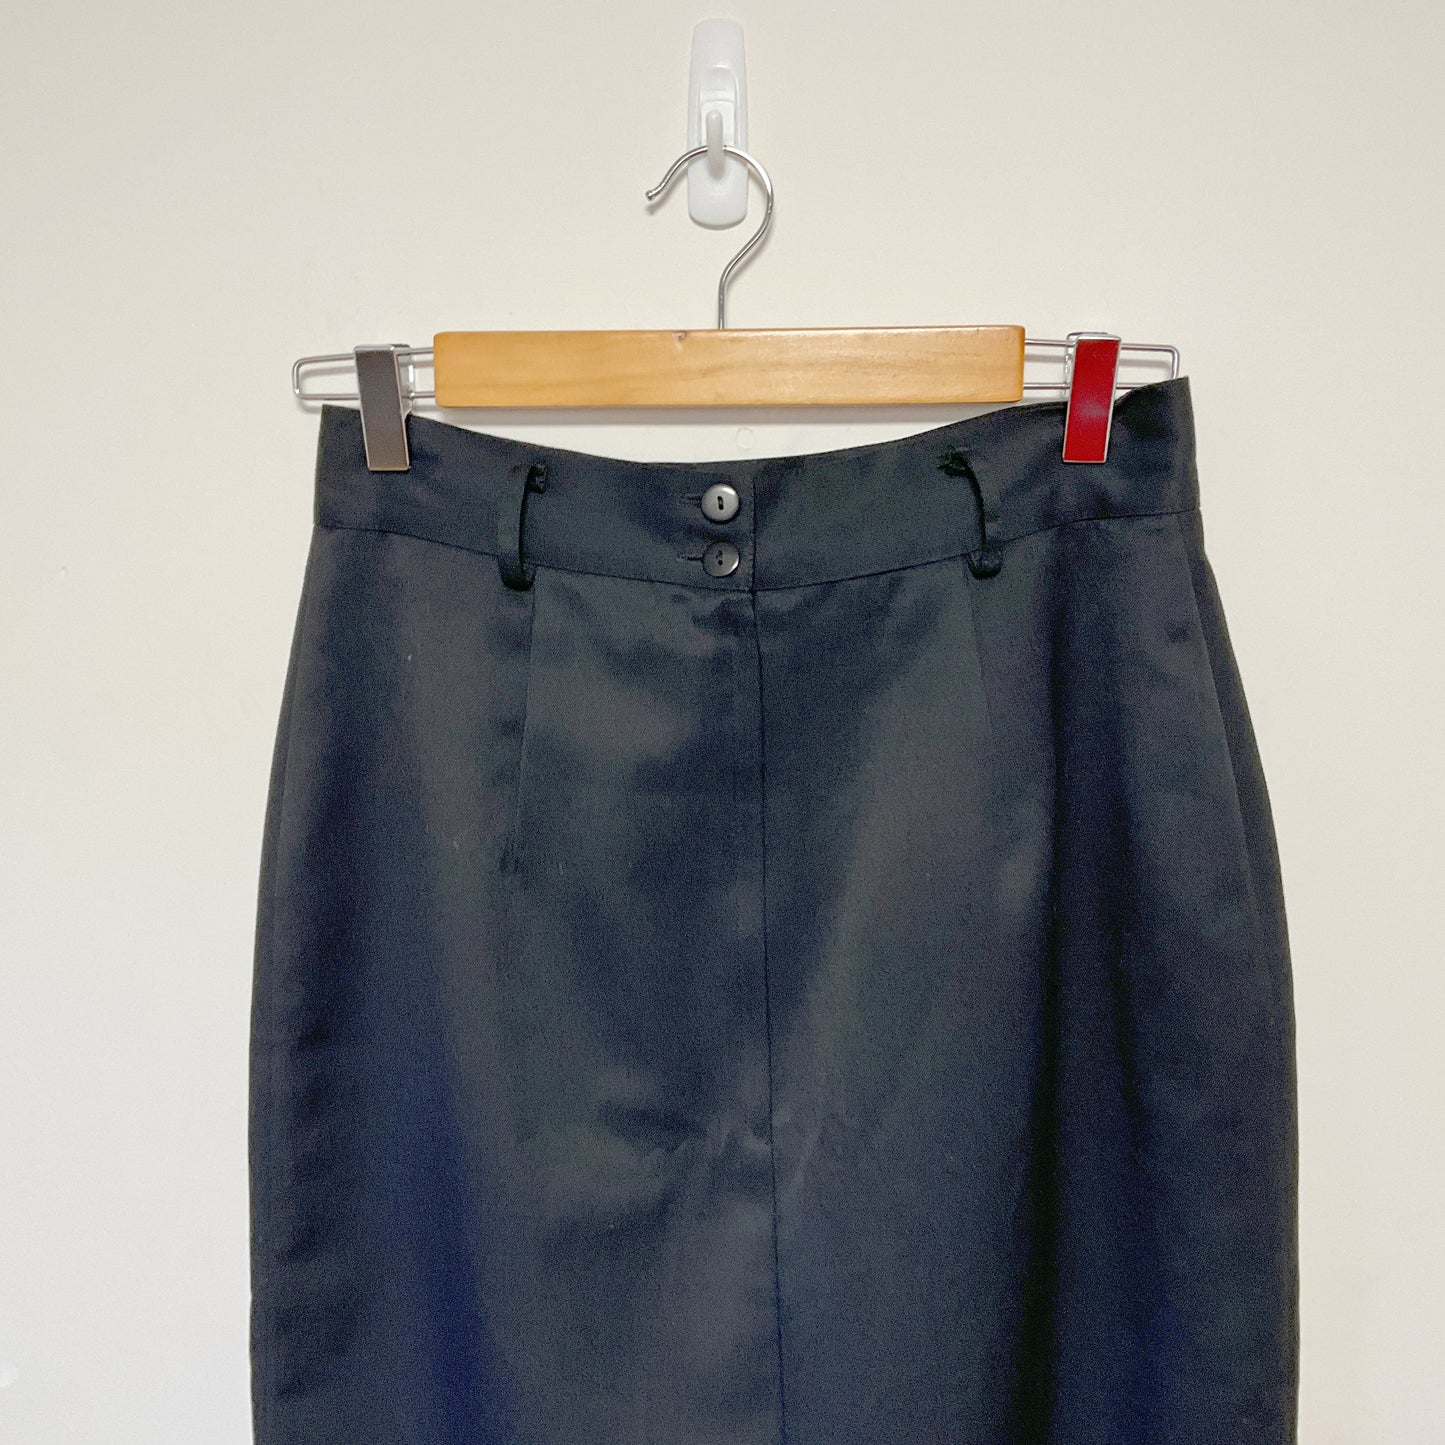 Katies - Black Pencil Skirt